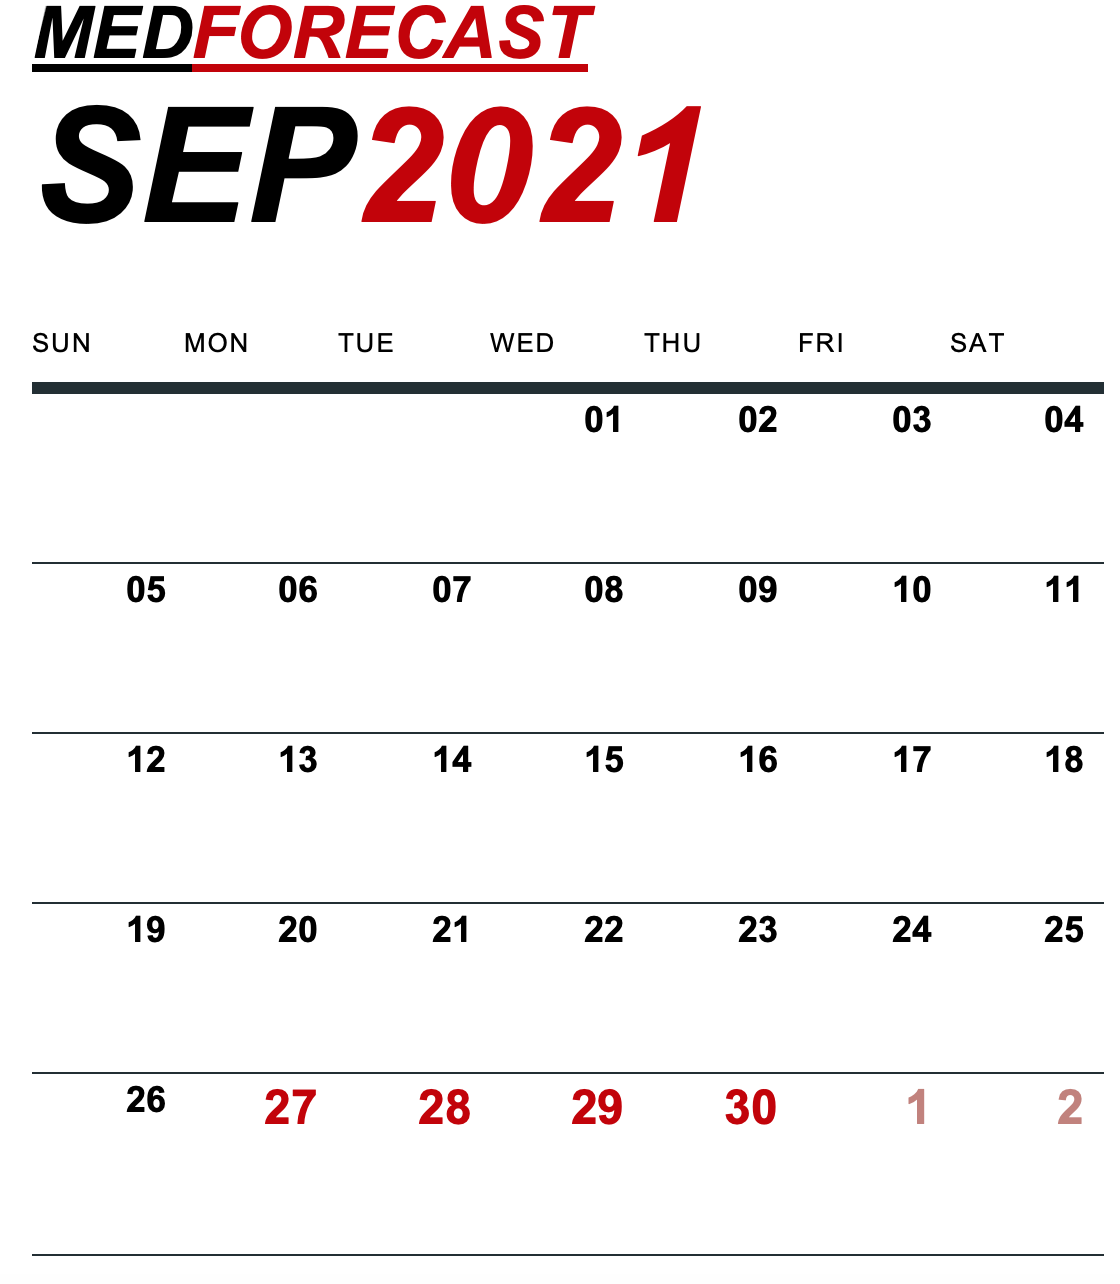 Medical News Forecast for September 27-October 3, 2021